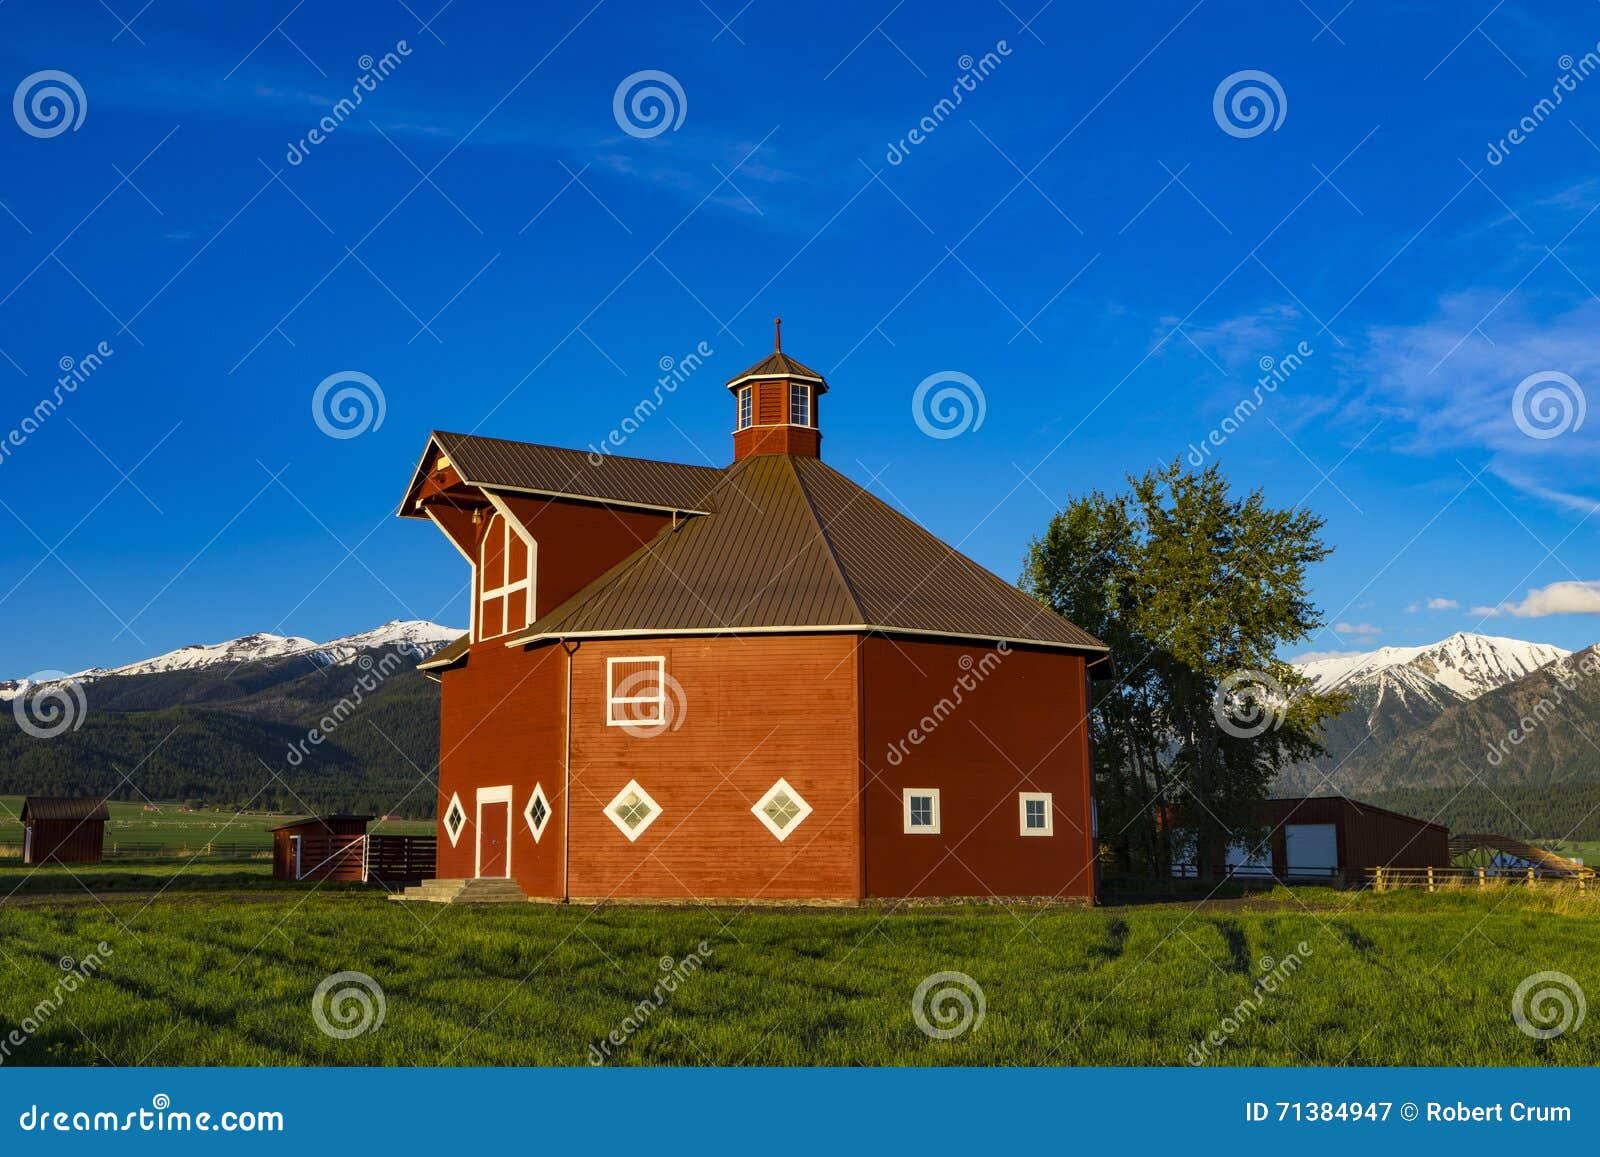 red octagonal barn